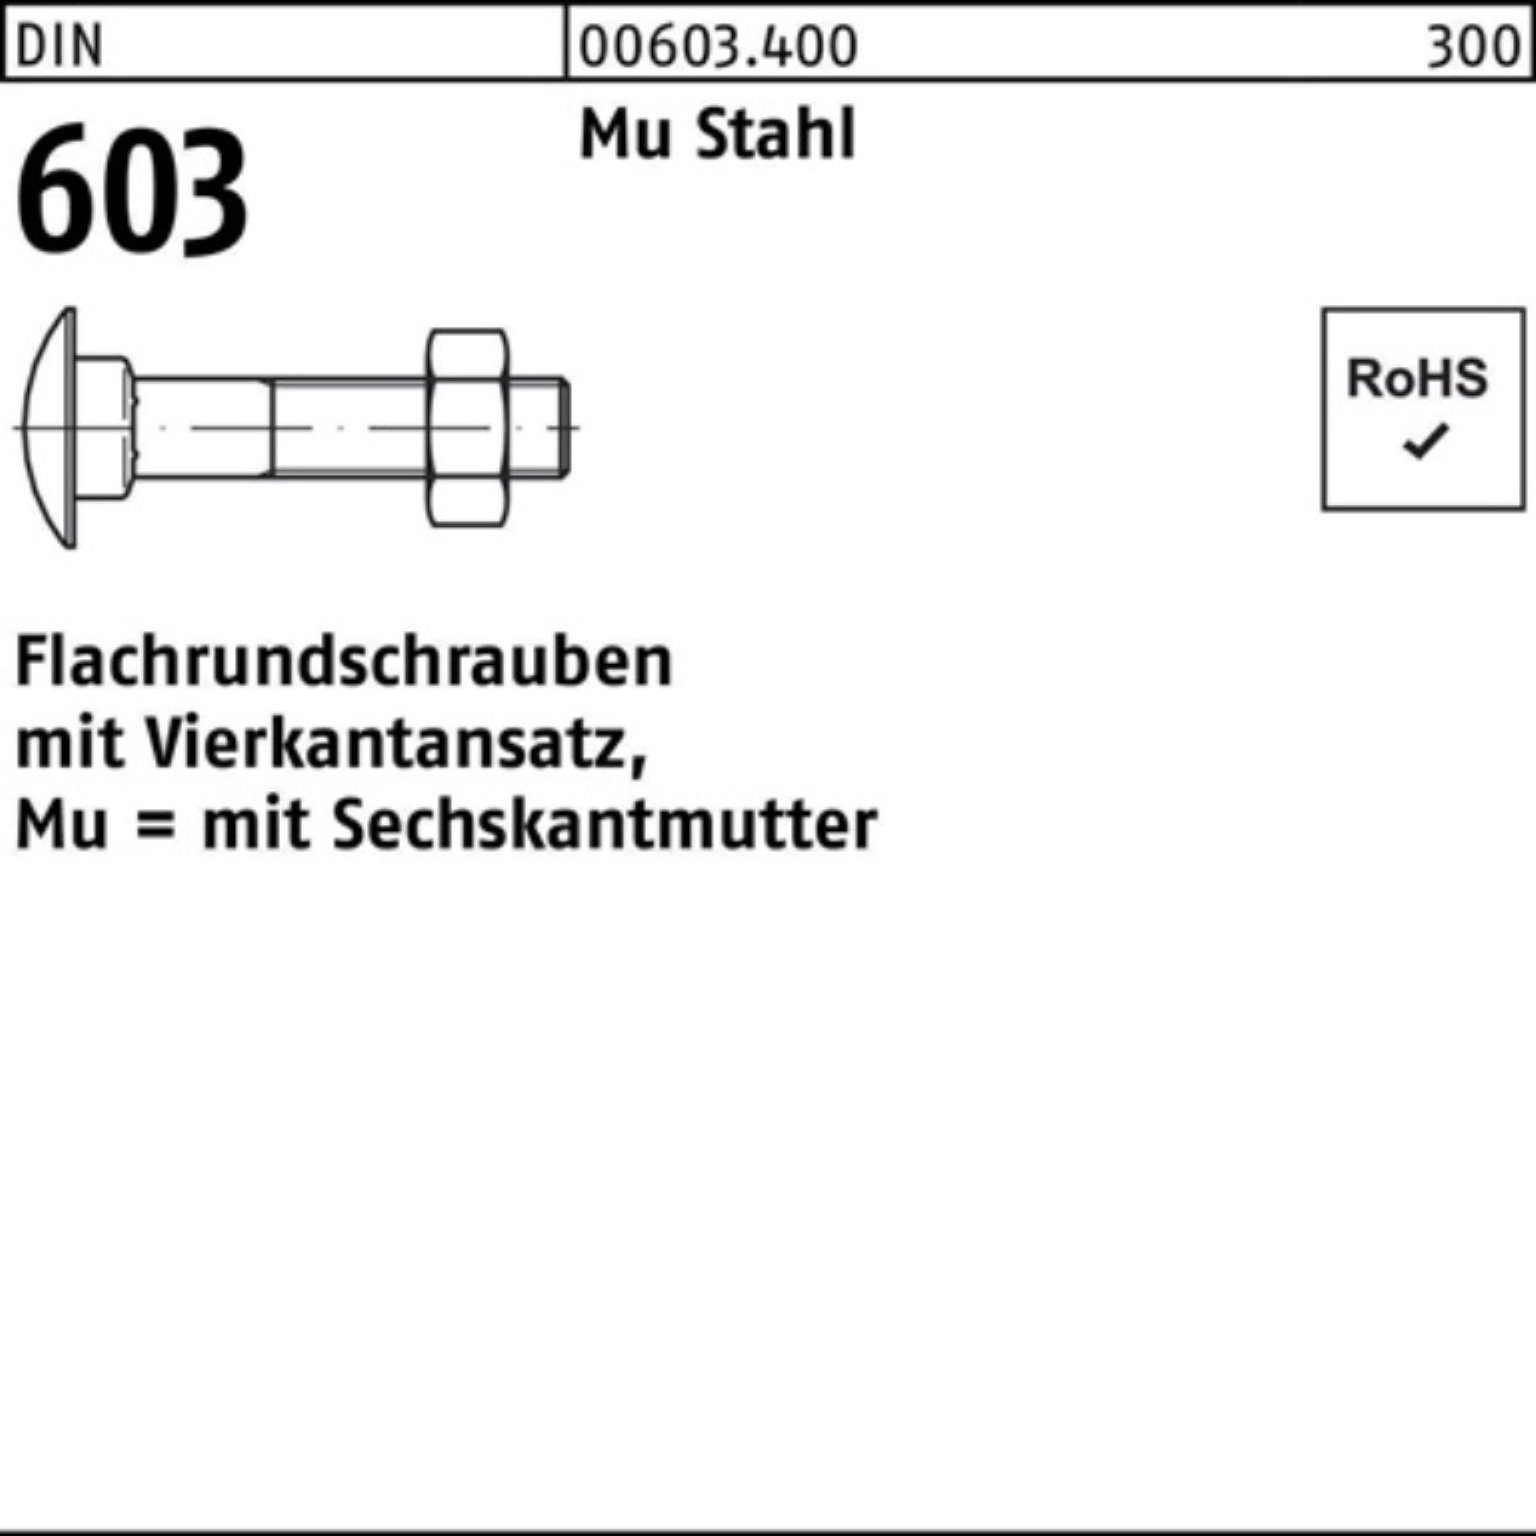 M6x80 200er DIN M 603 Vierkantansatz/6-ktmutter Pack Schraube Reyher Flachrundschraube